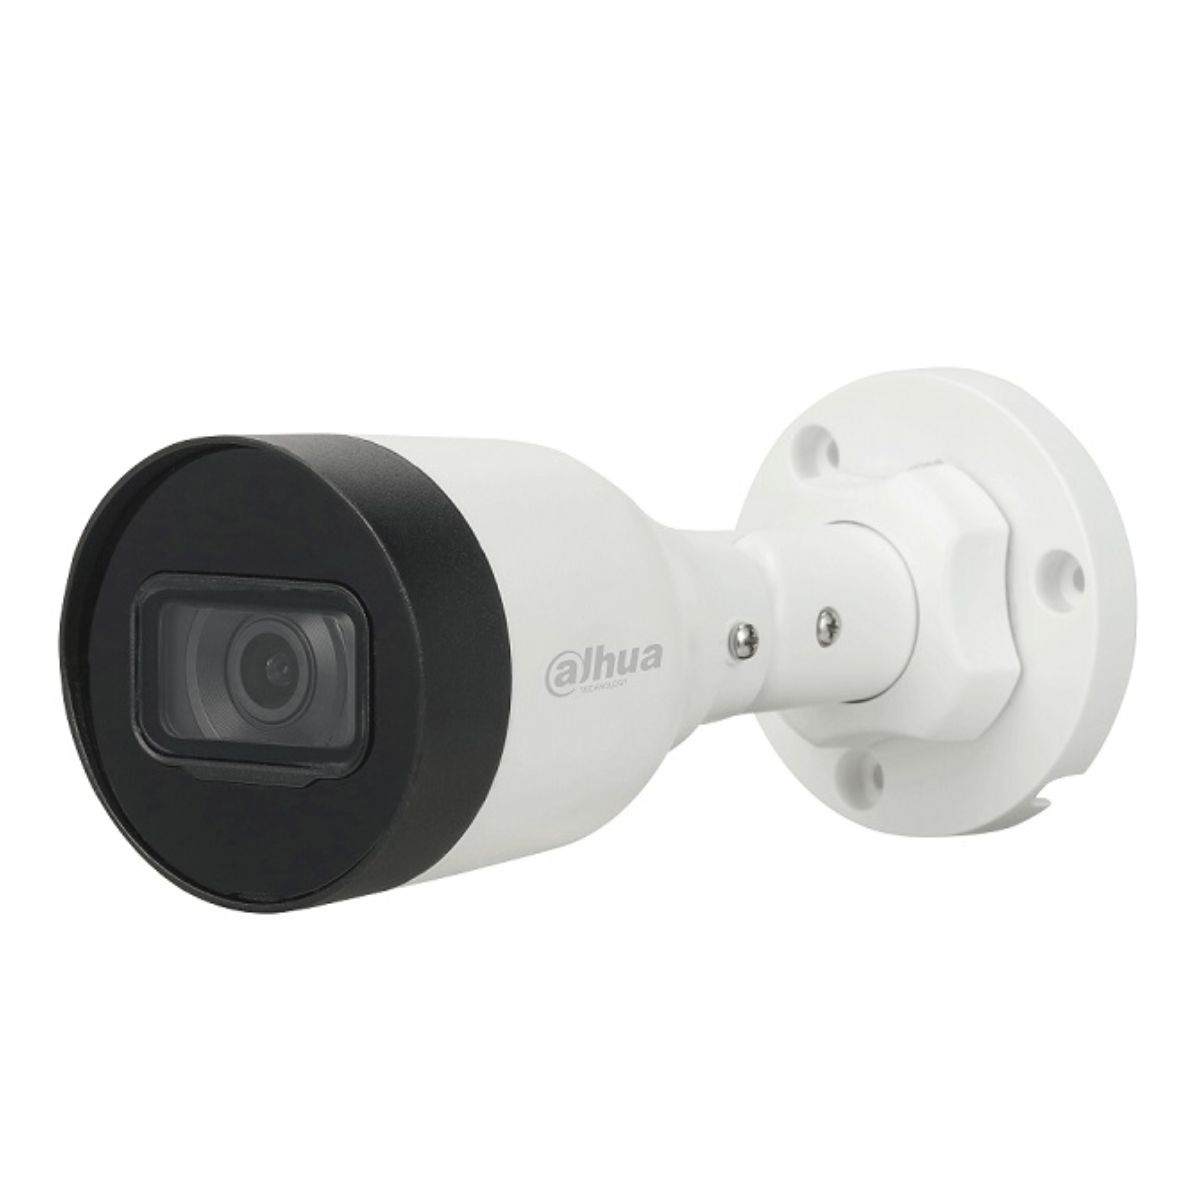 Camera IP hồng ngoại 2MP Dahua DH-IPC-HFW1230S1P-S5-VN hồng ngoại 30m, chuẩn nén H.265+ 